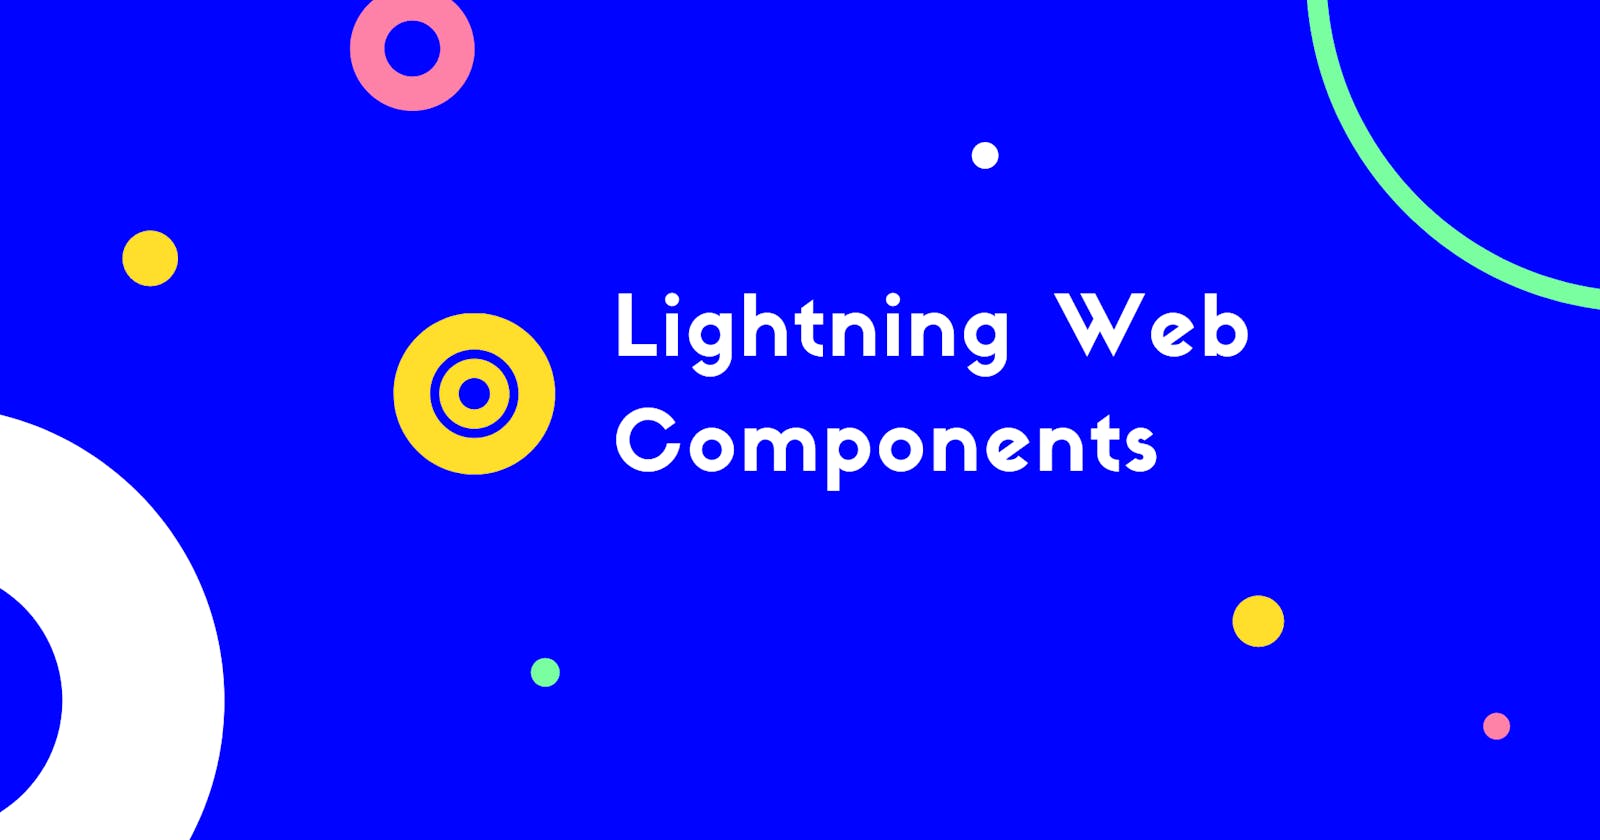 Lightning web components - More JavaScript!